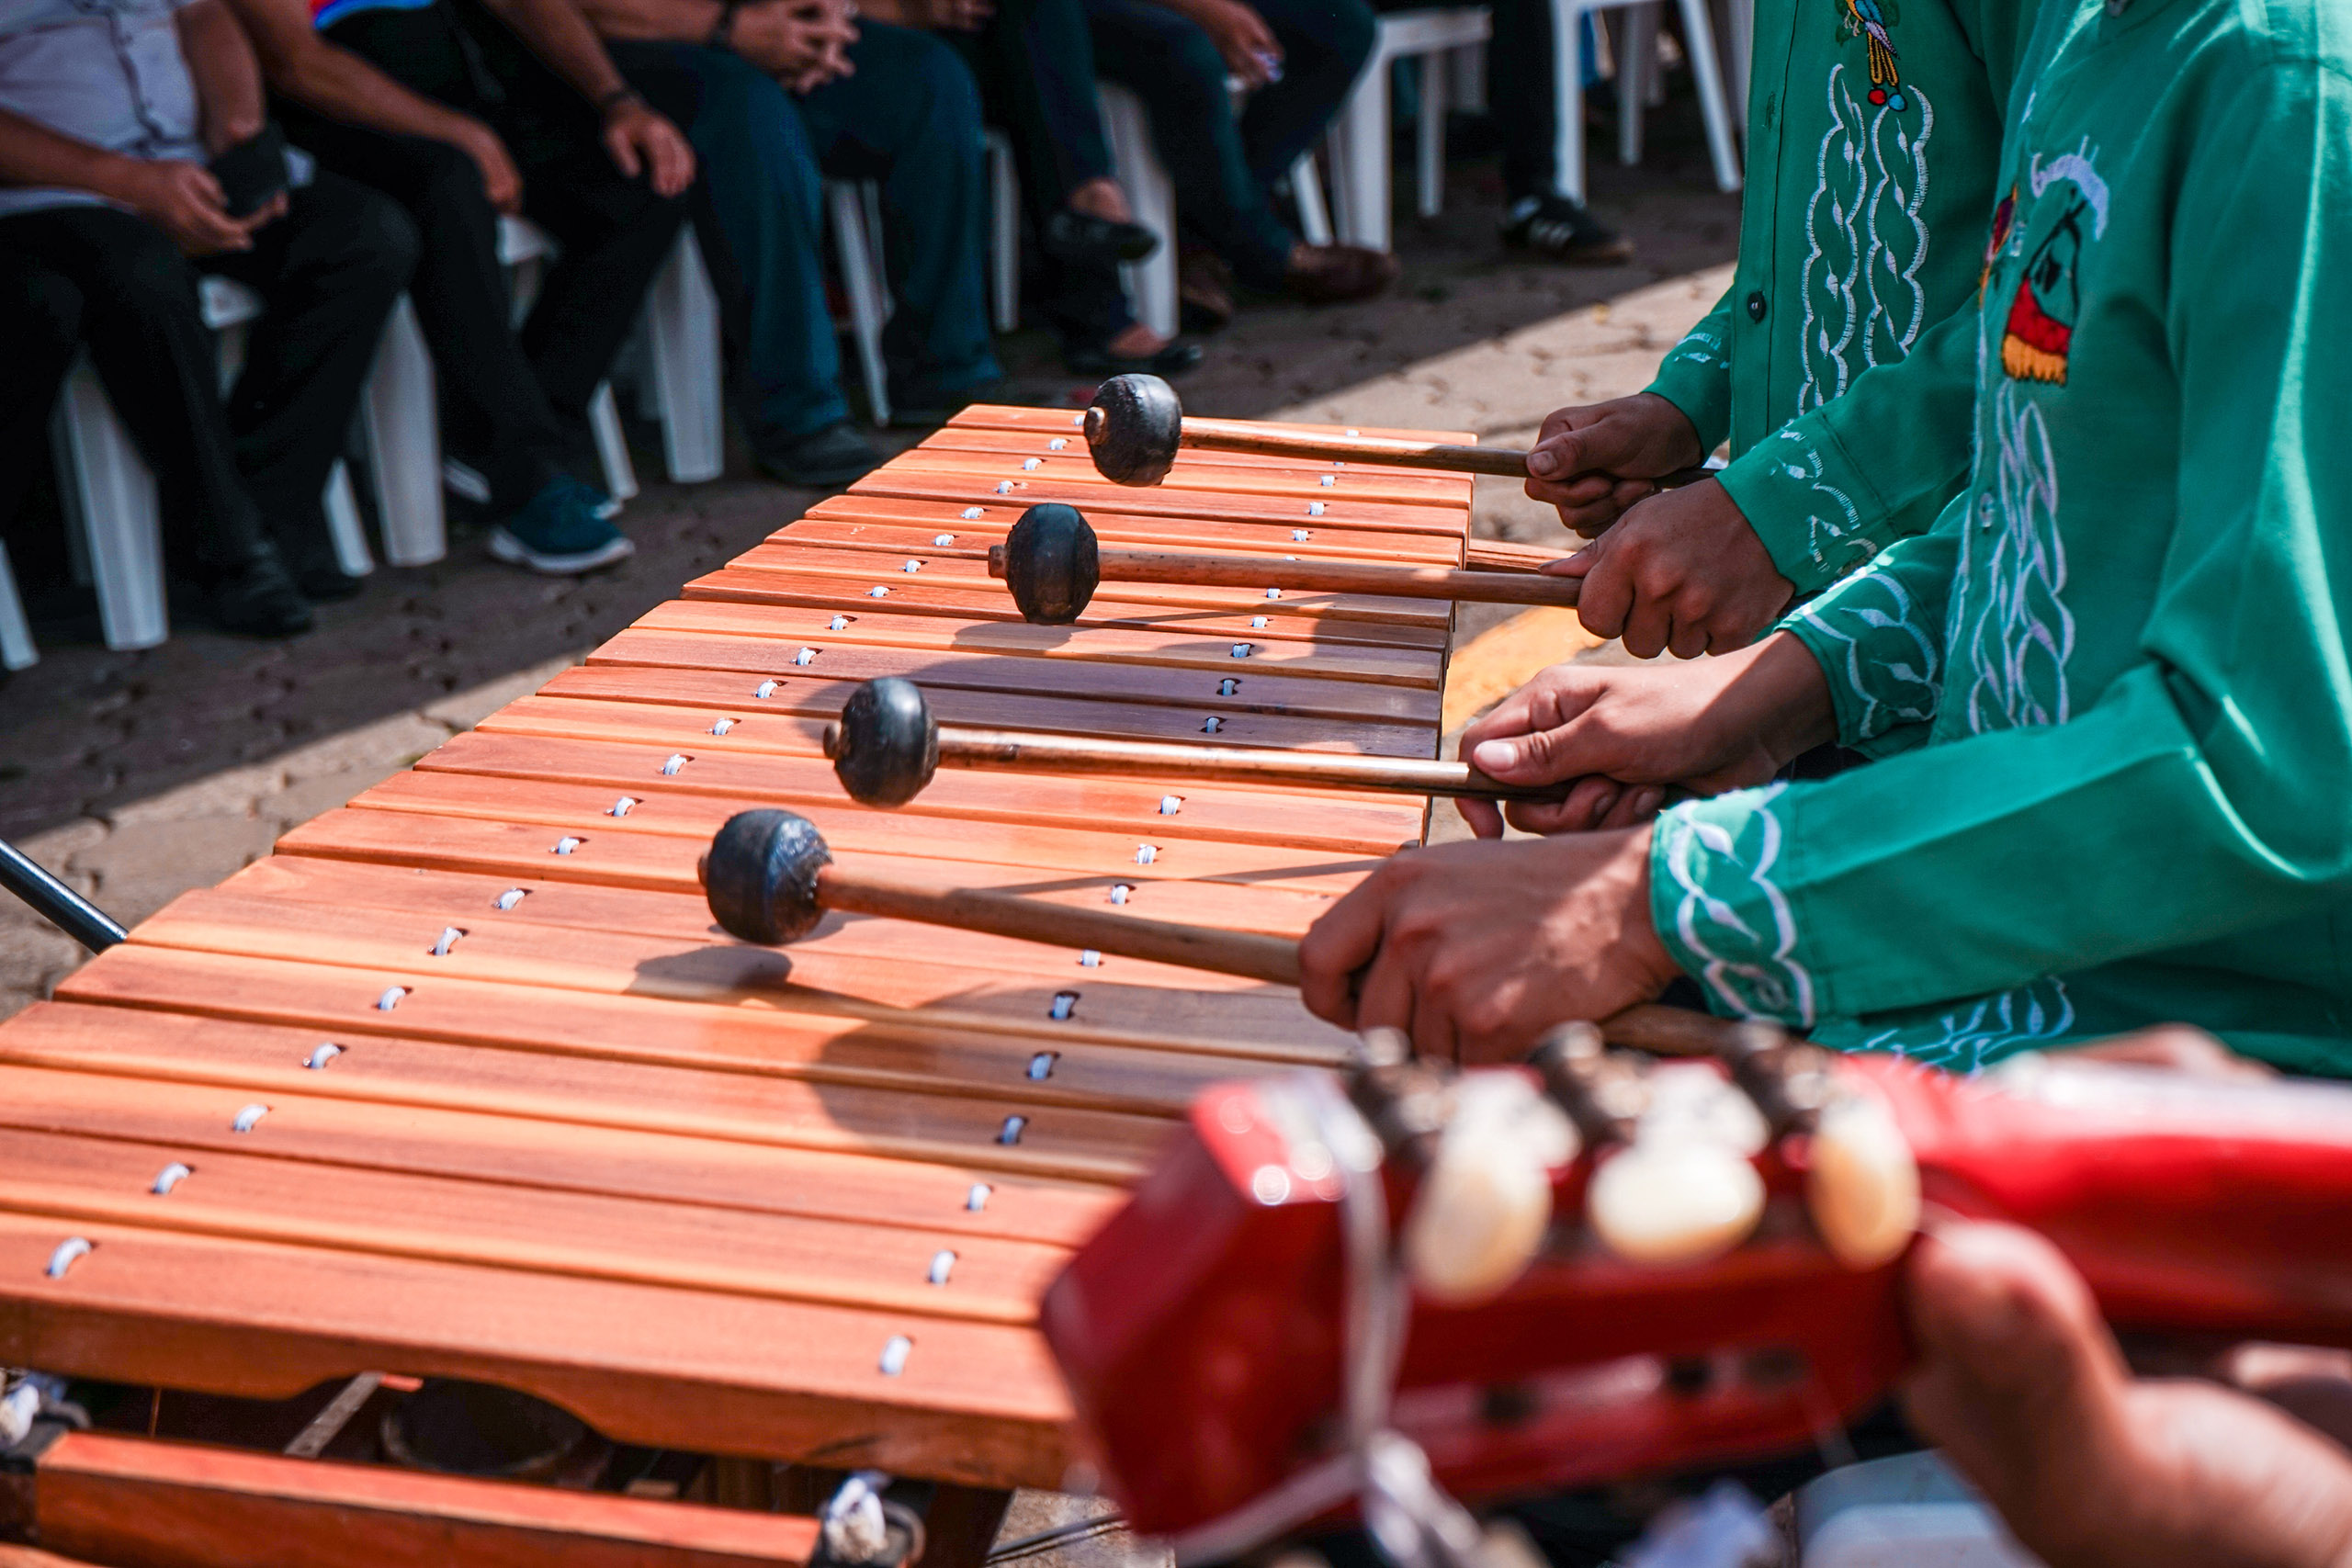 Marimba rhythms from the wooden piano of Masaya, Nicaragua